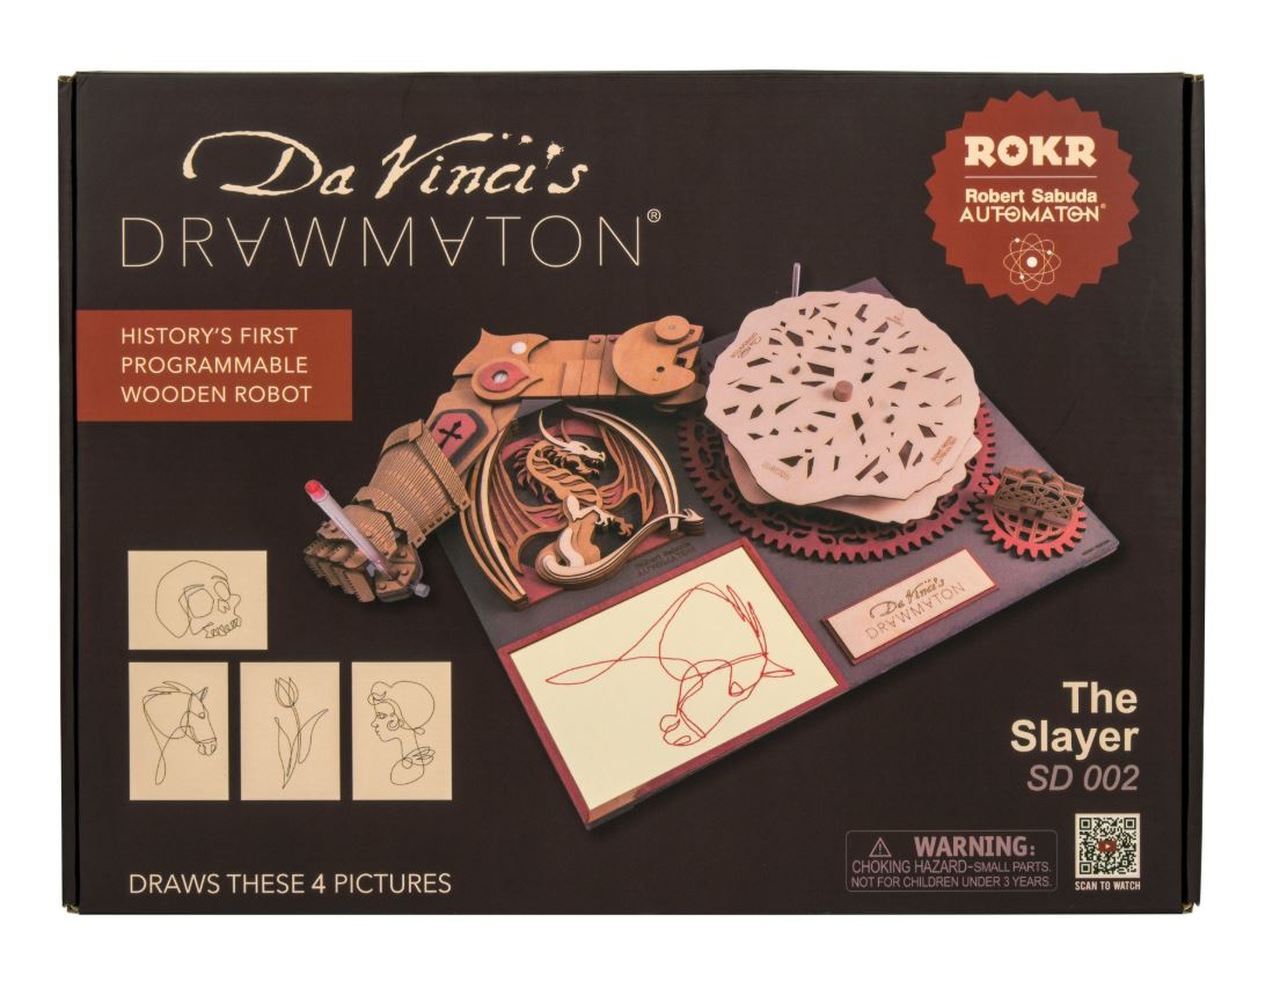 Da Vinci Drawmaton - the Slayer